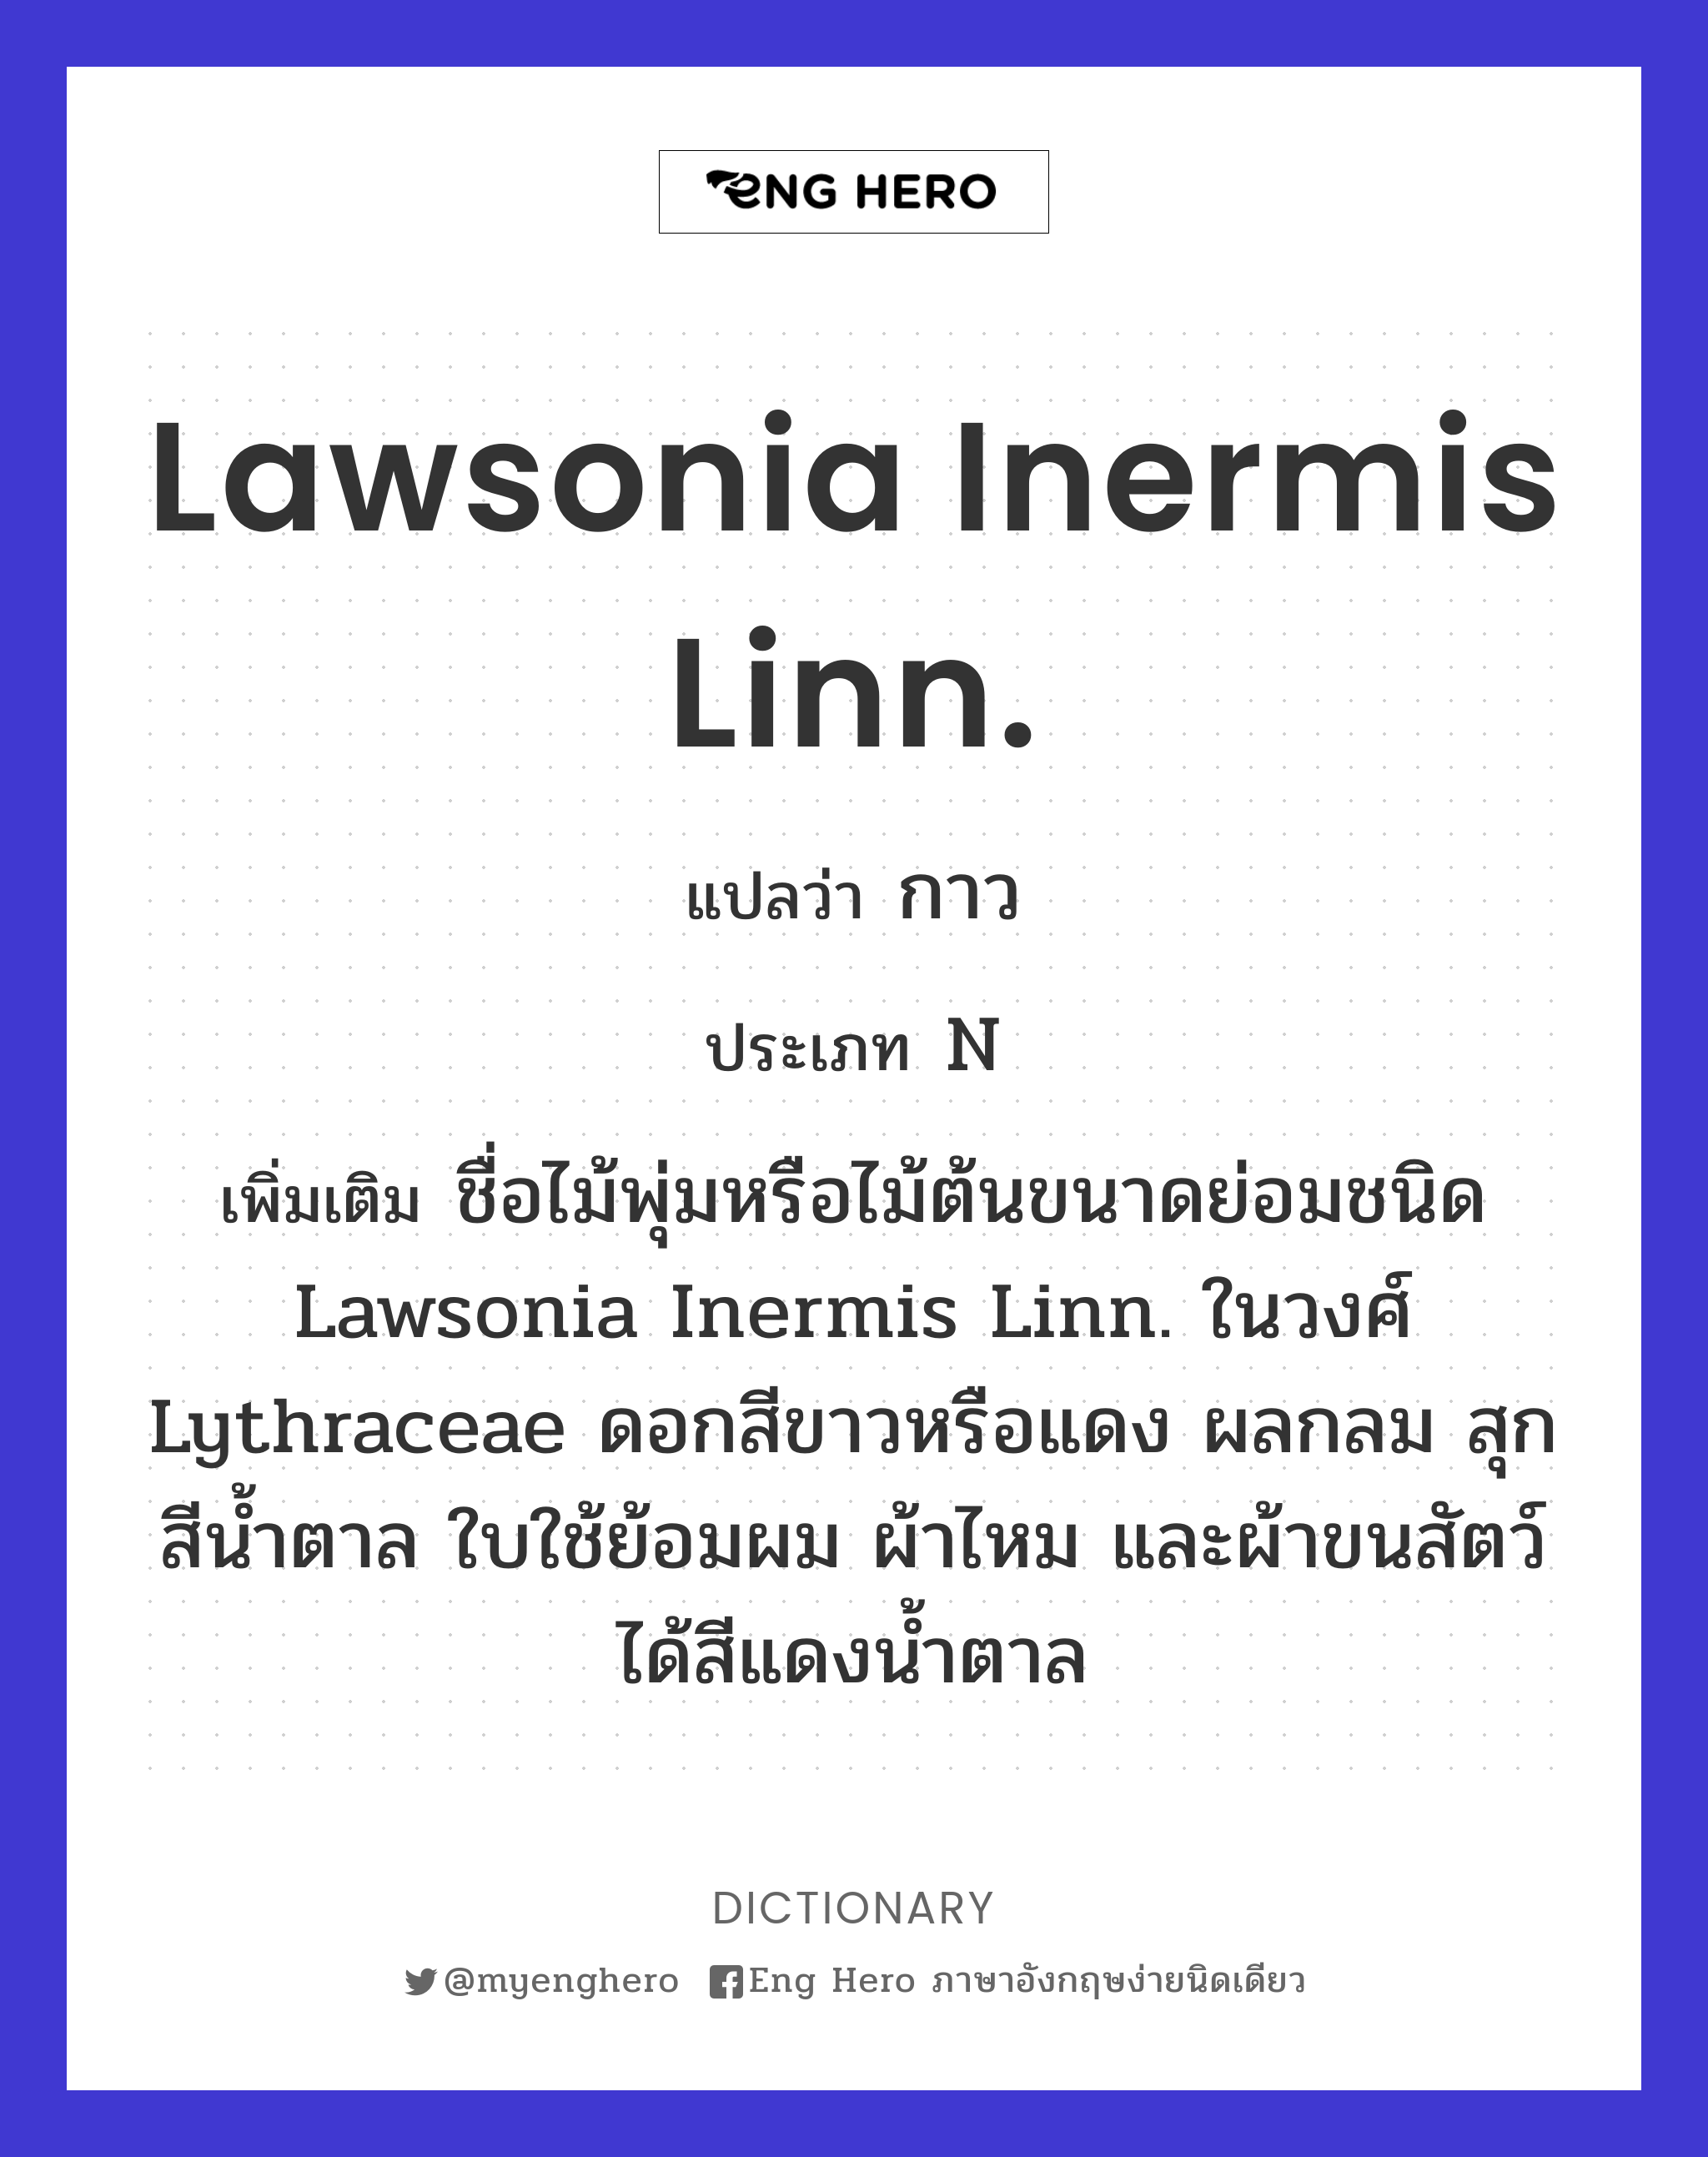 Lawsonia inermis Linn.